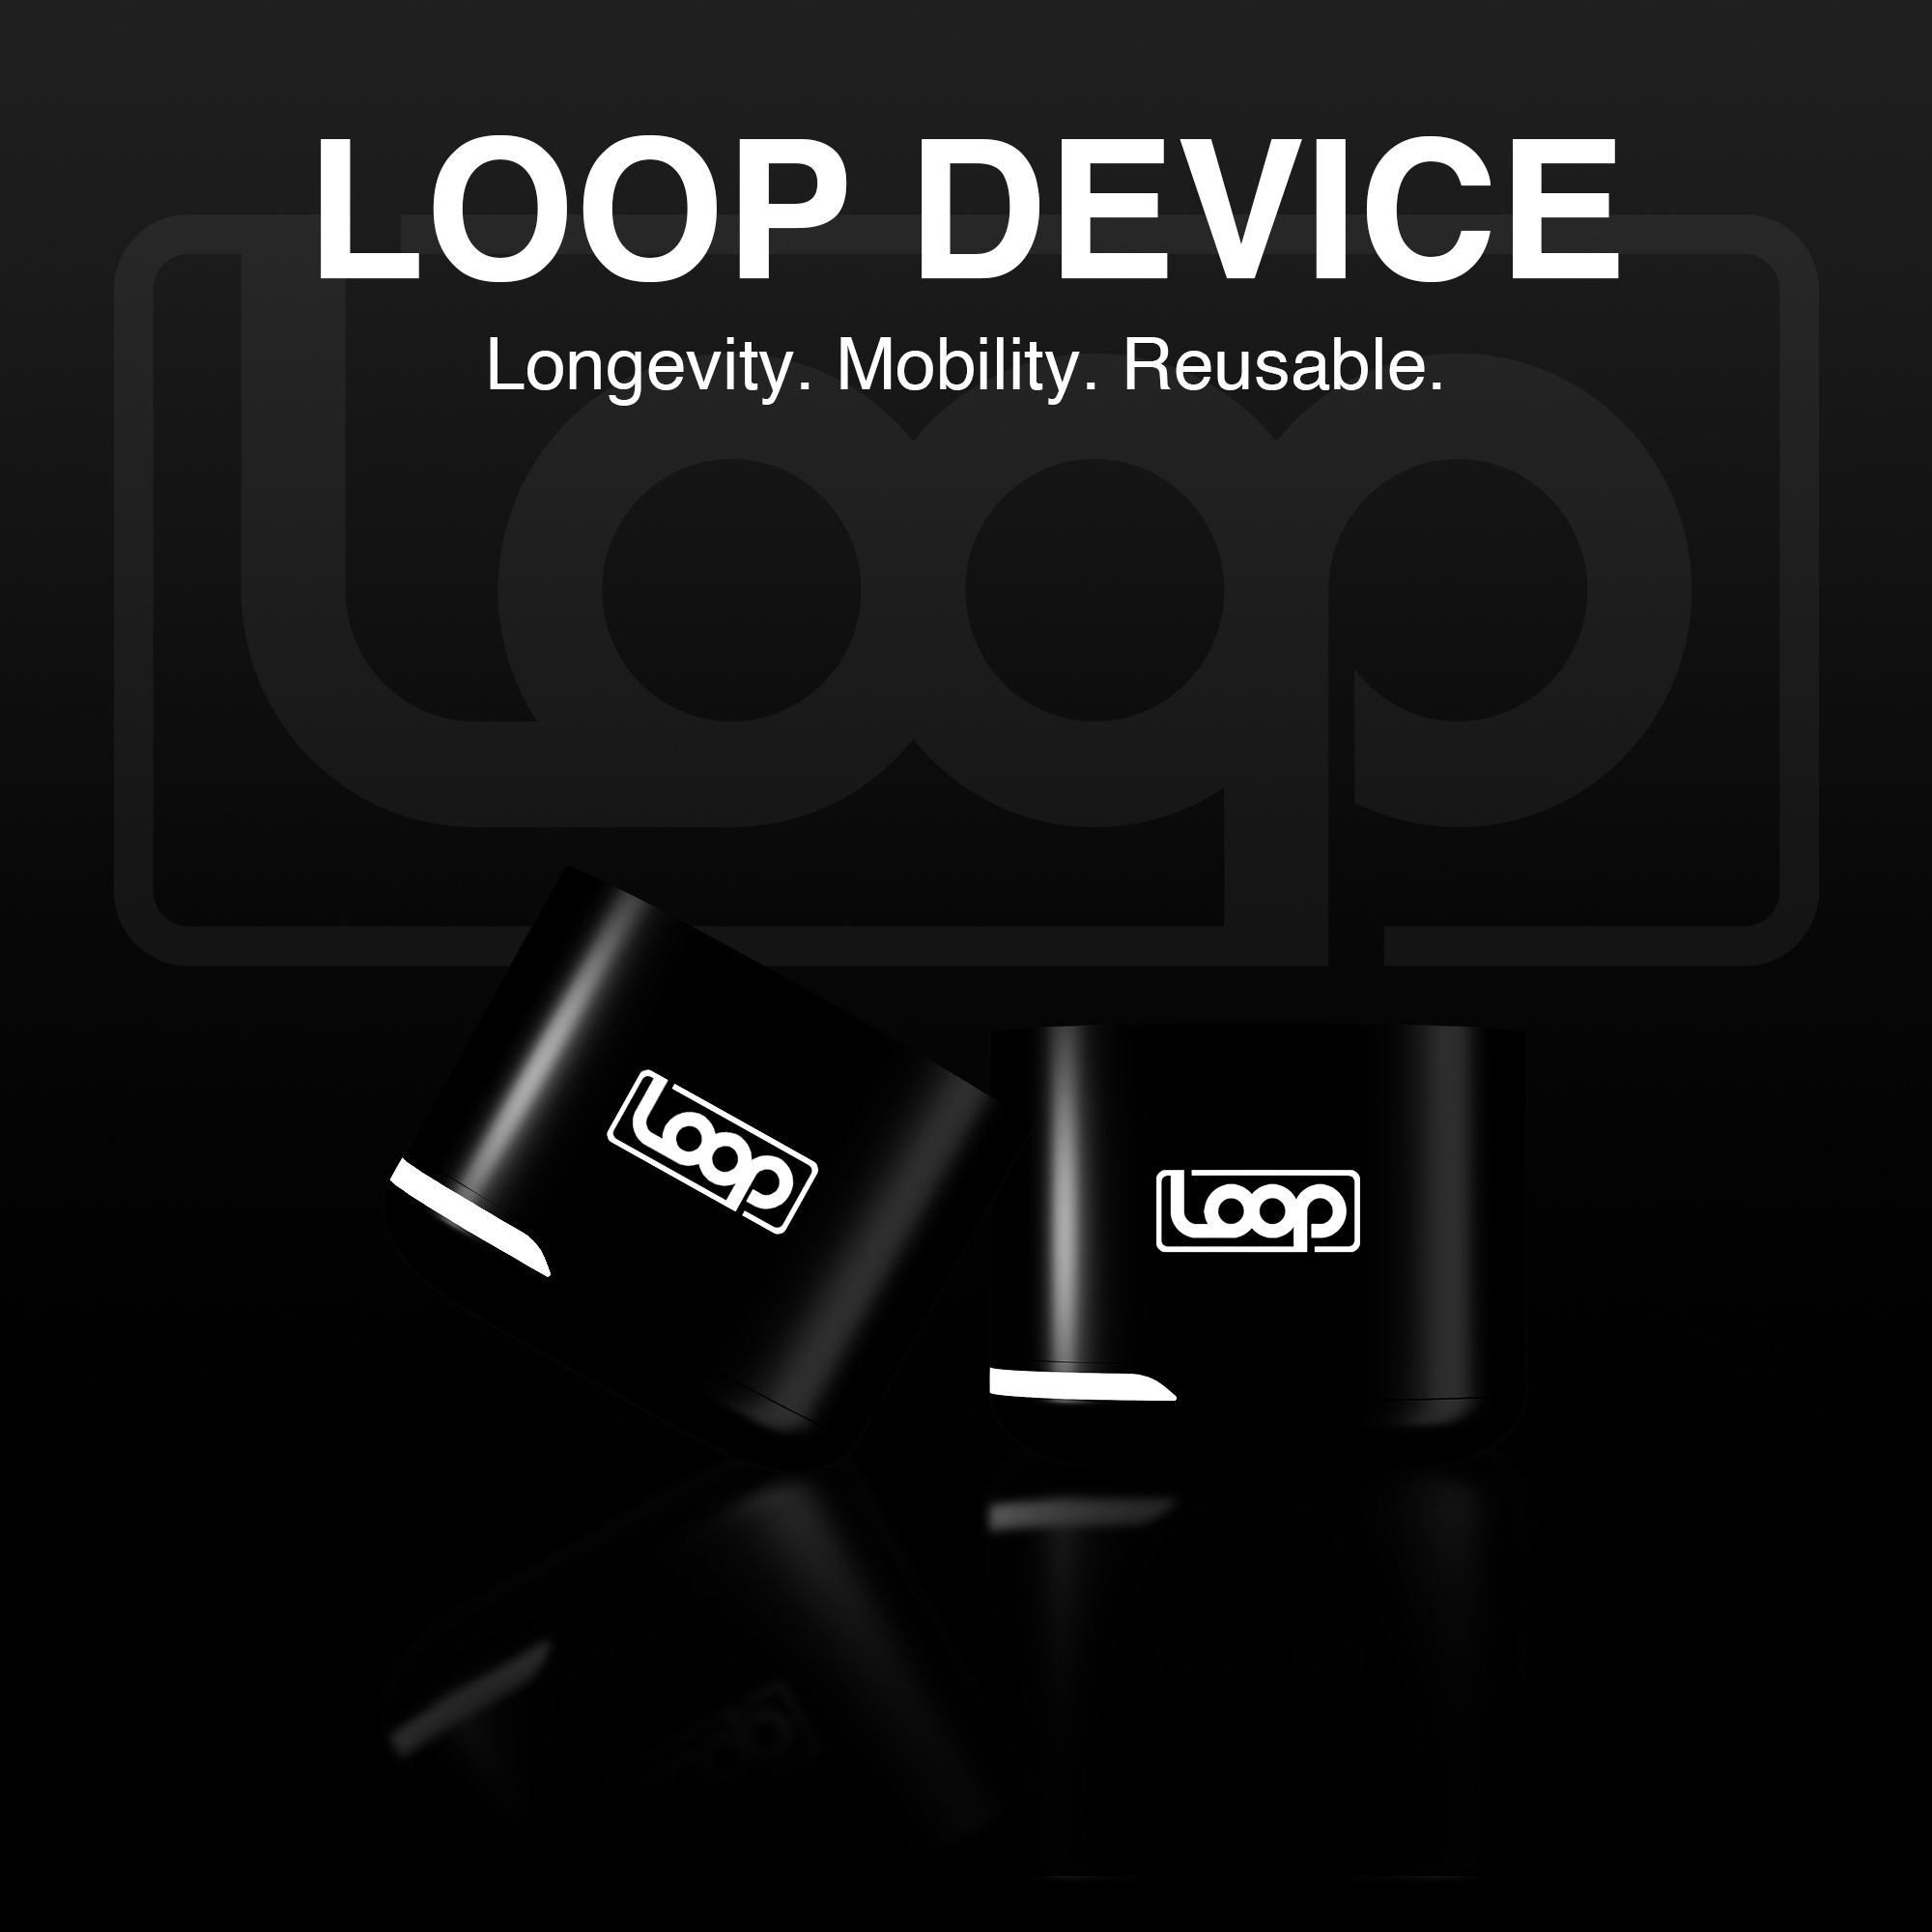 LOOP DEVICE: Longevity. Mobility. Reusable.